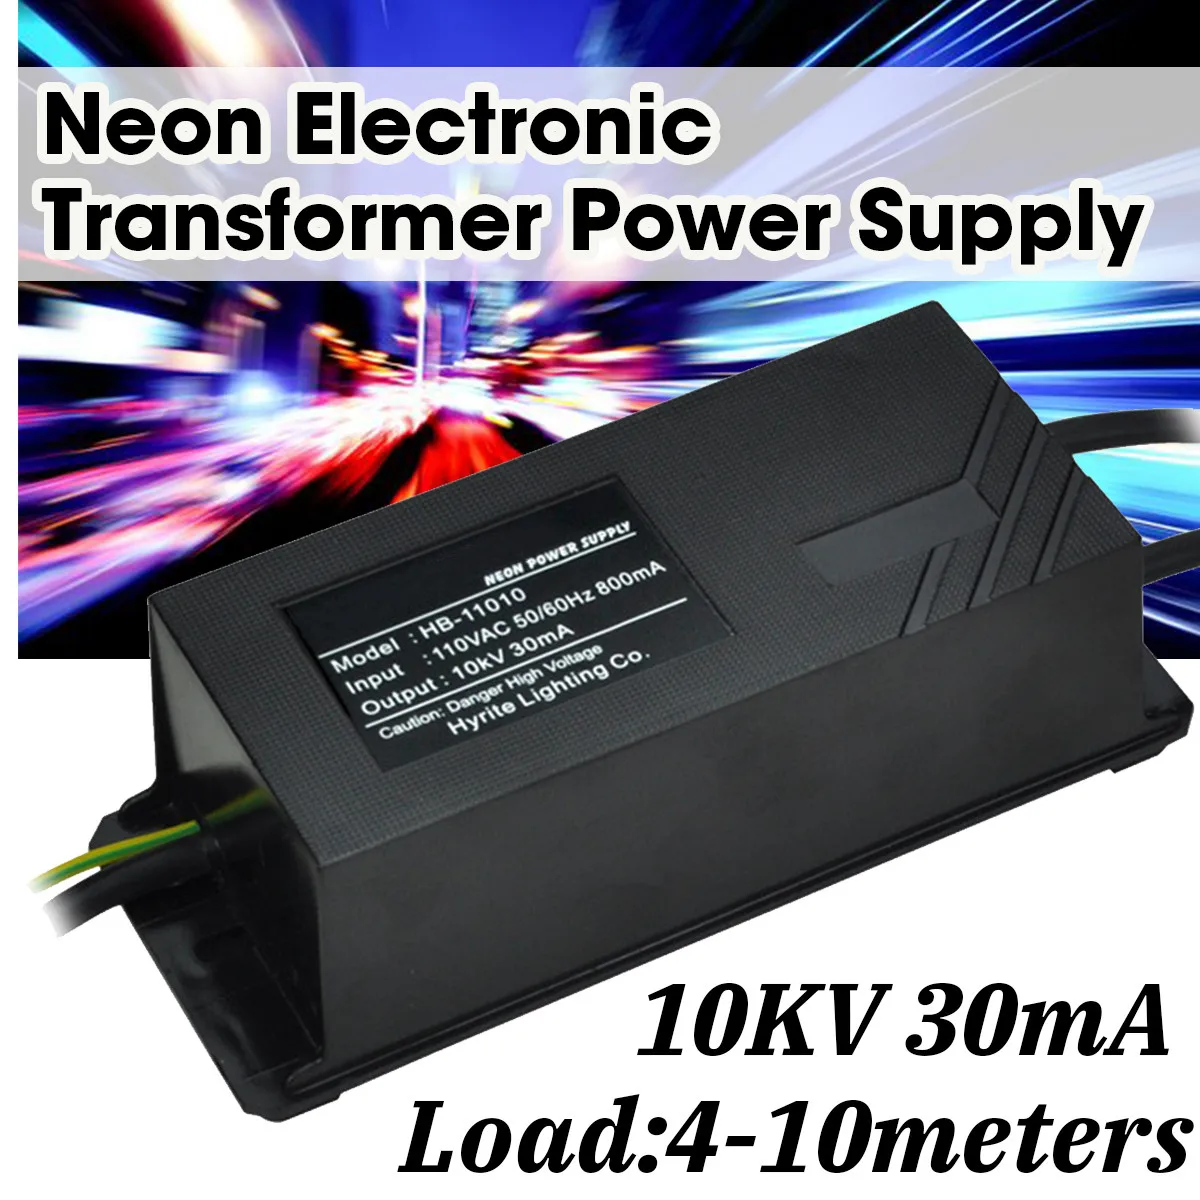 

110V 7.5KV/10KV 30mA Neon Electronic Transformer Power Supply Load 4-10meters